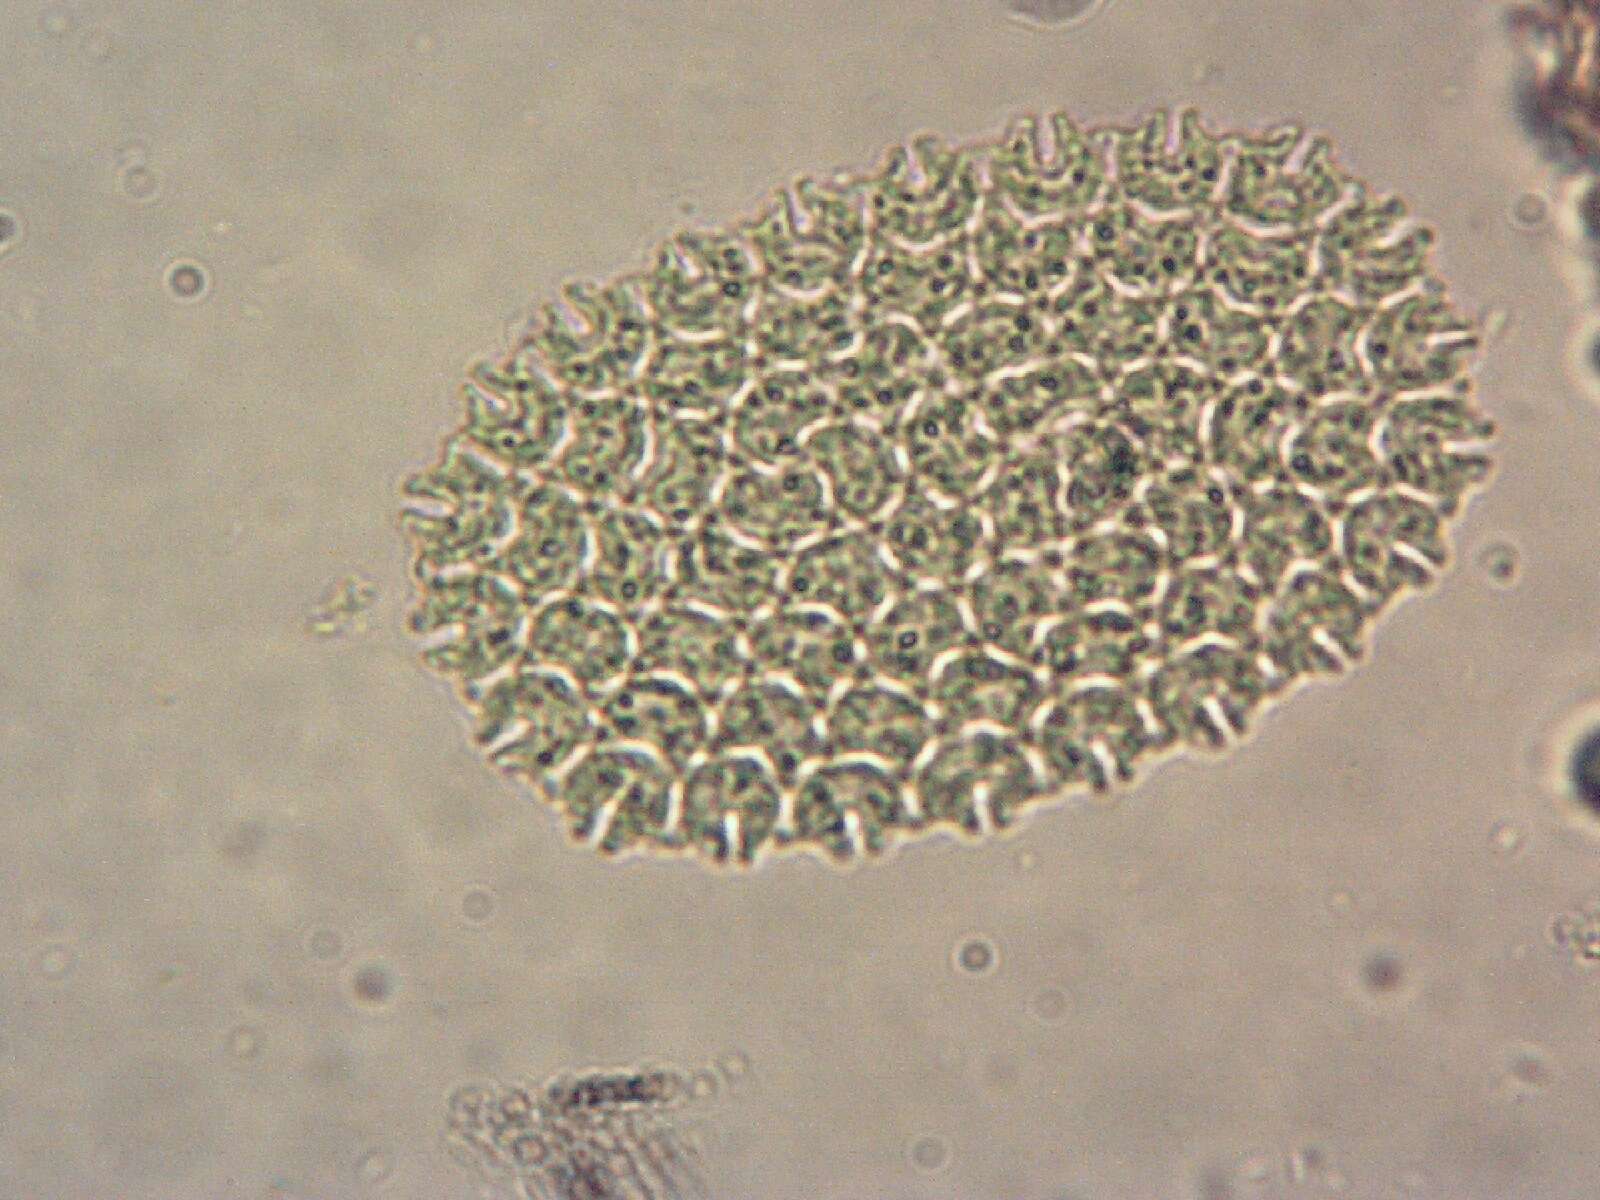 Plancia ëd Pediastrum angulosum